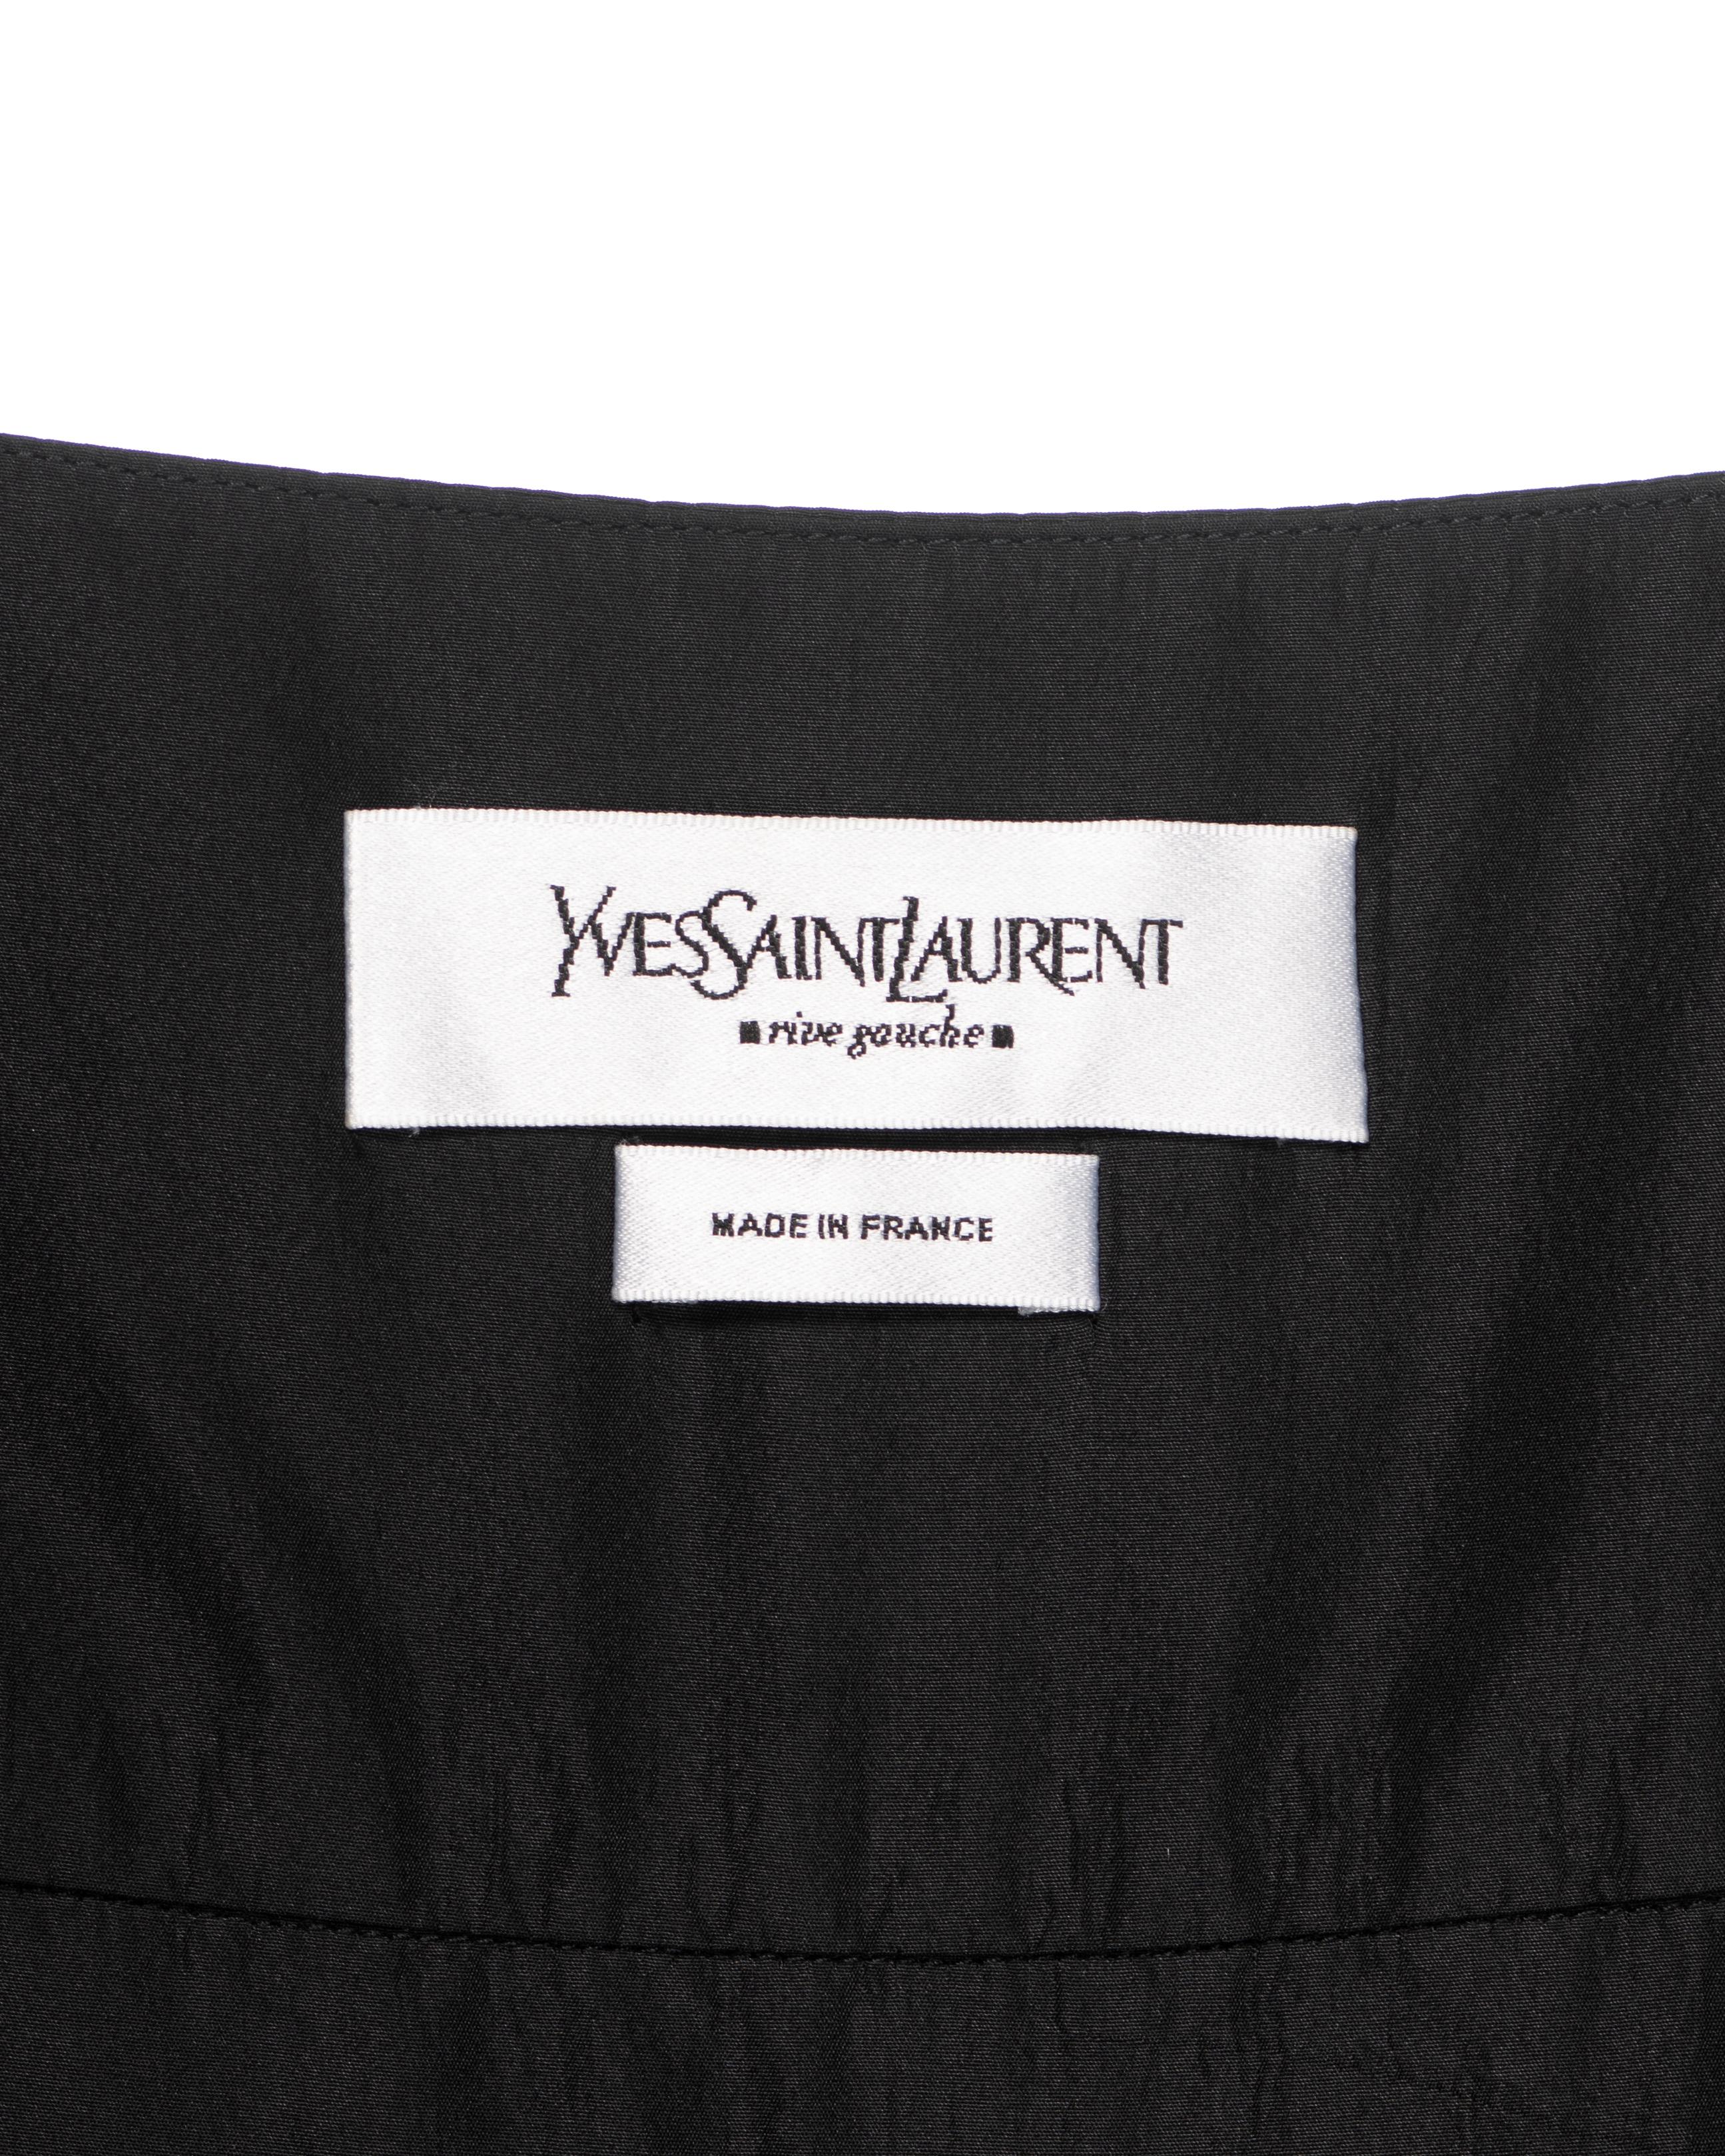 Yves Saint Laurent by Tom Ford Black Silk Taffeta Trained Evening Skirt, FW 2001 For Sale 14